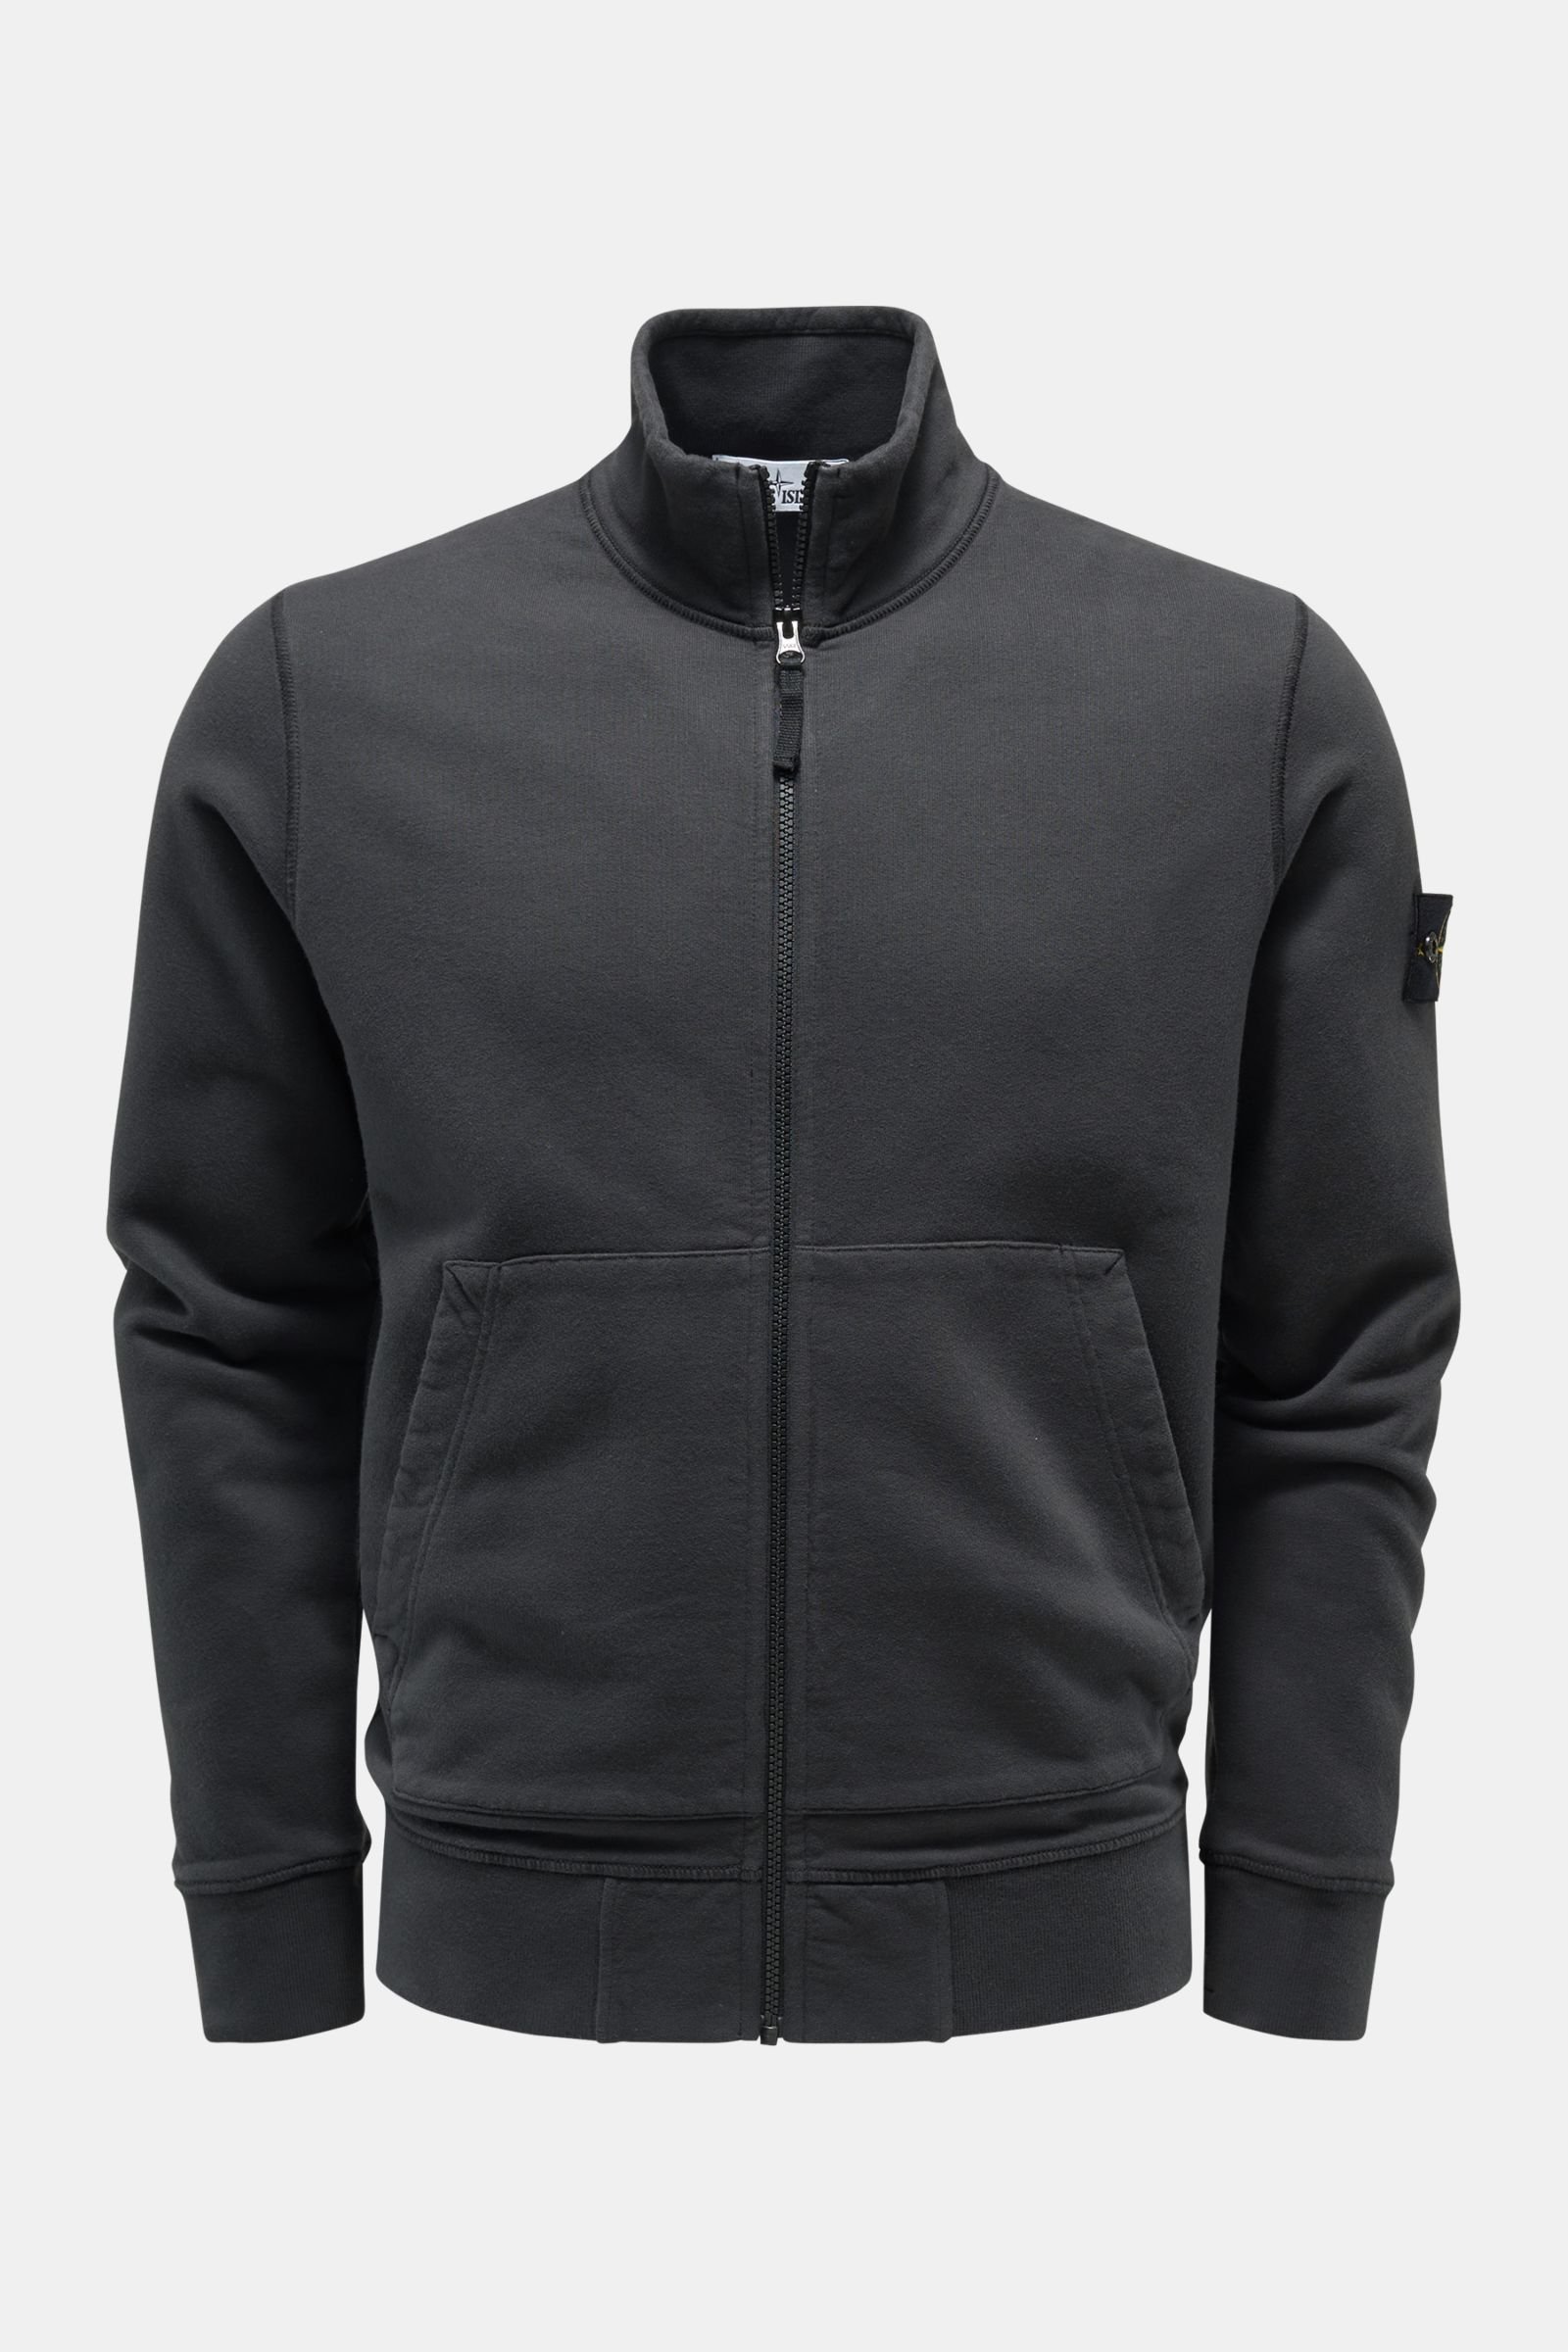 Sweat jacket dark grey